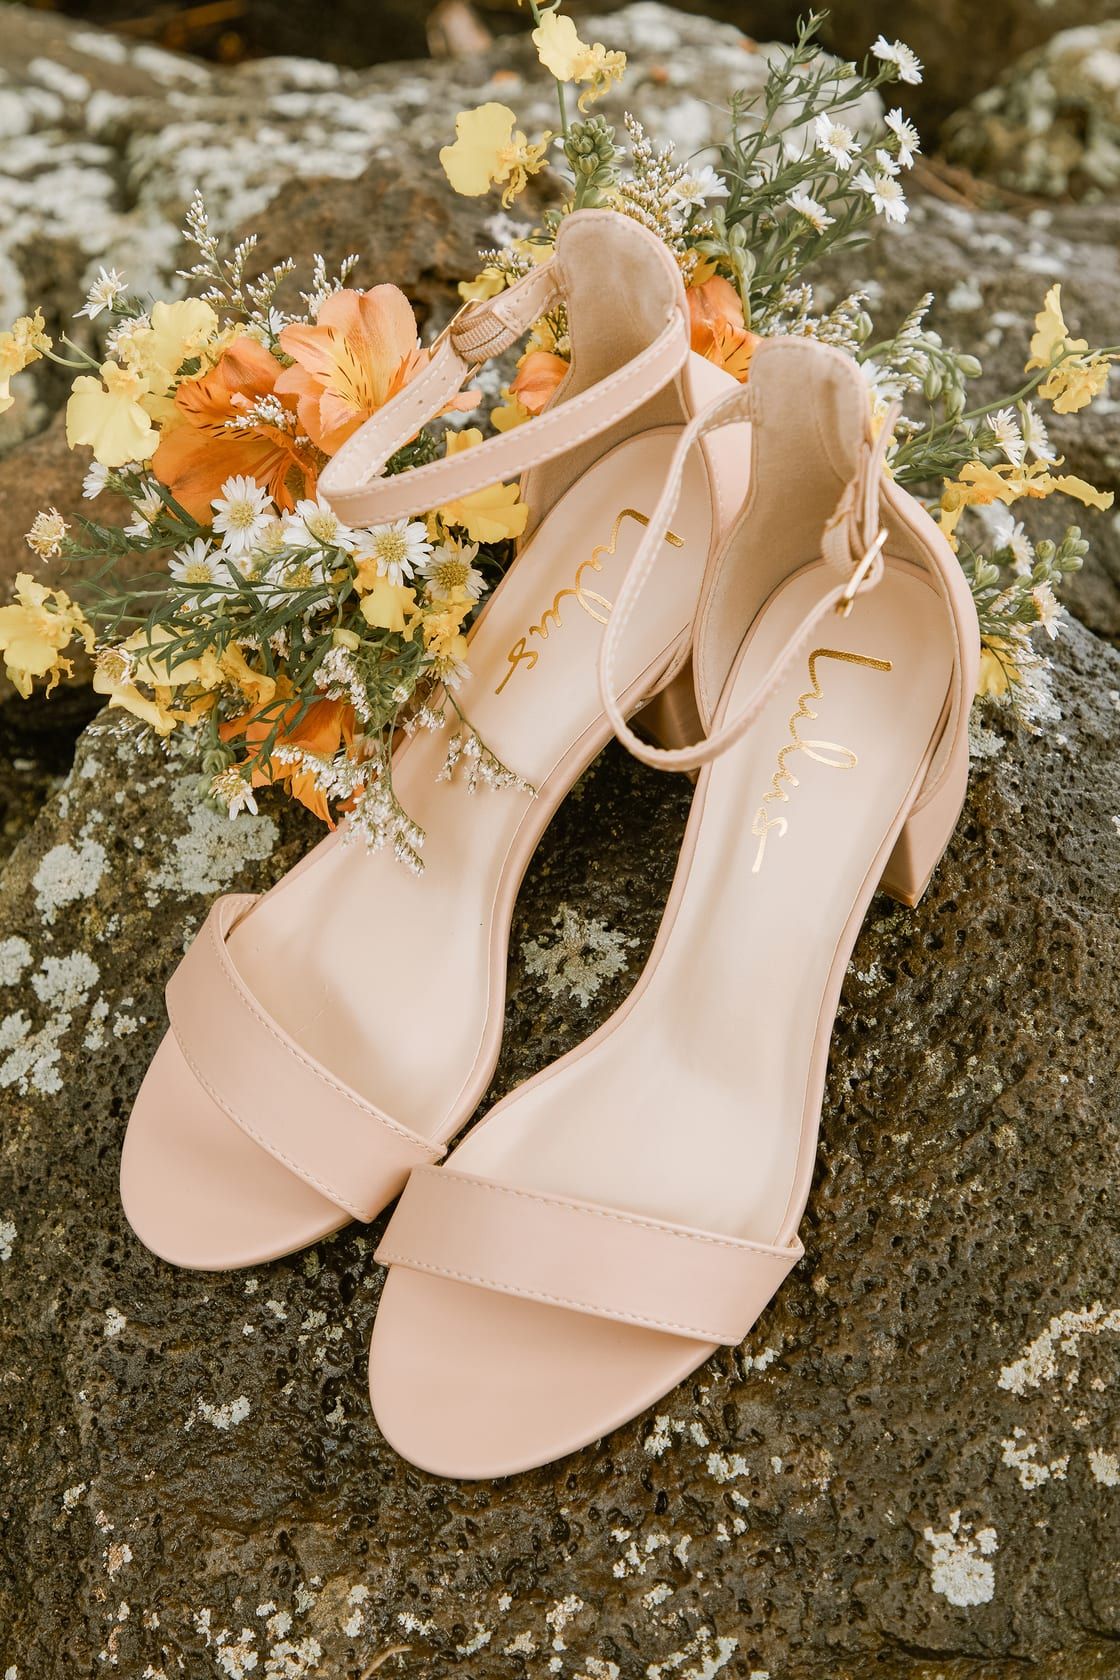 Harper Almond Ankle Strap Heels | Lulus